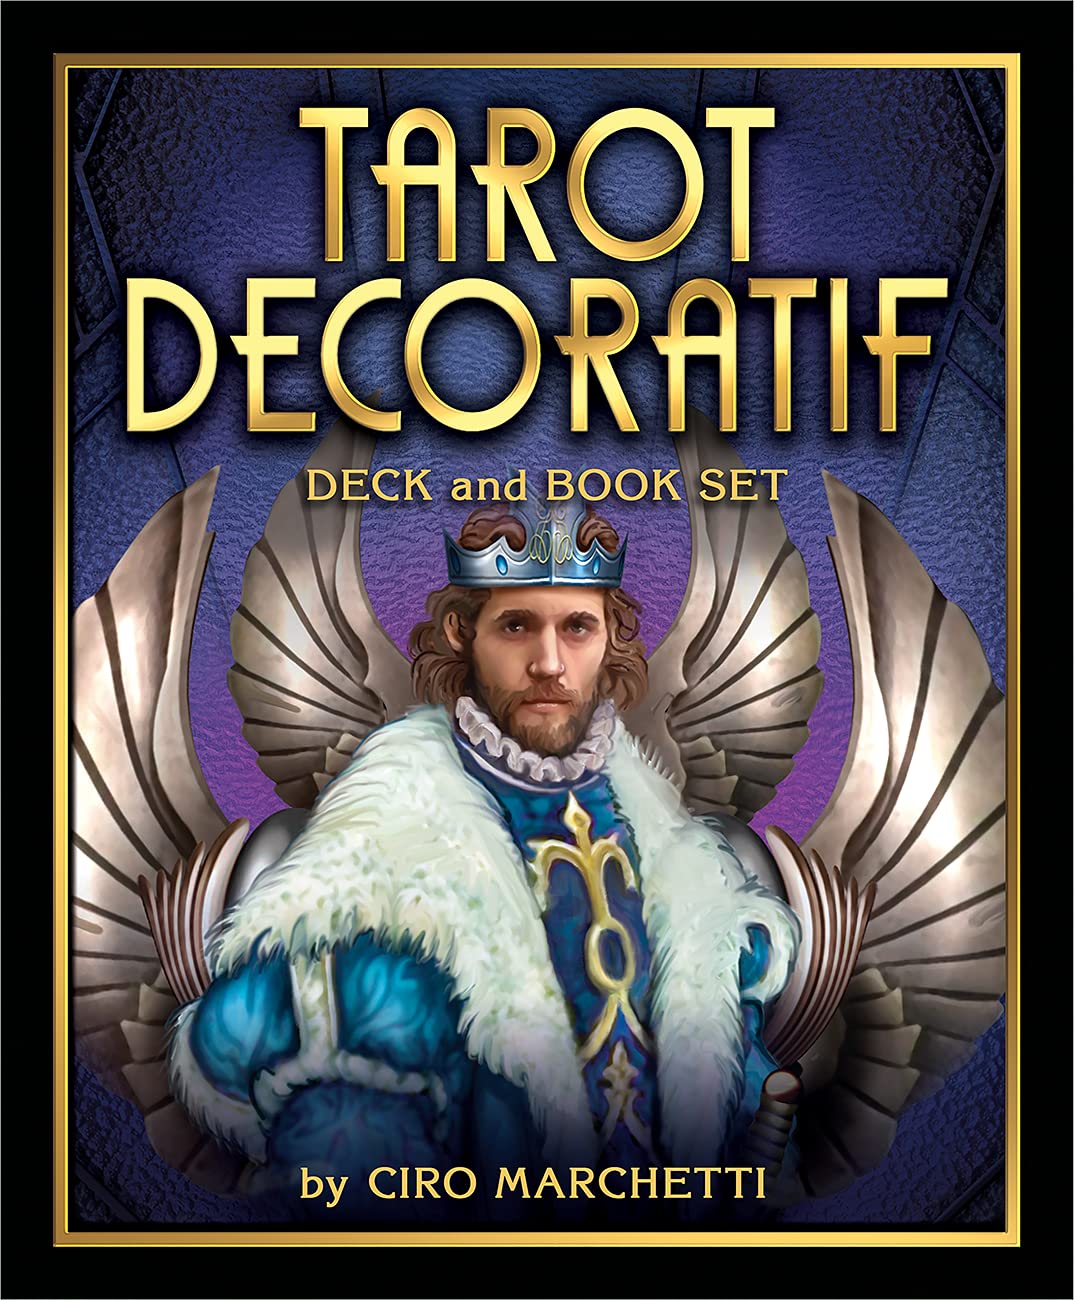 Tiskovina Tarot Decoratif Deck and Book Set Ciro Marchetti